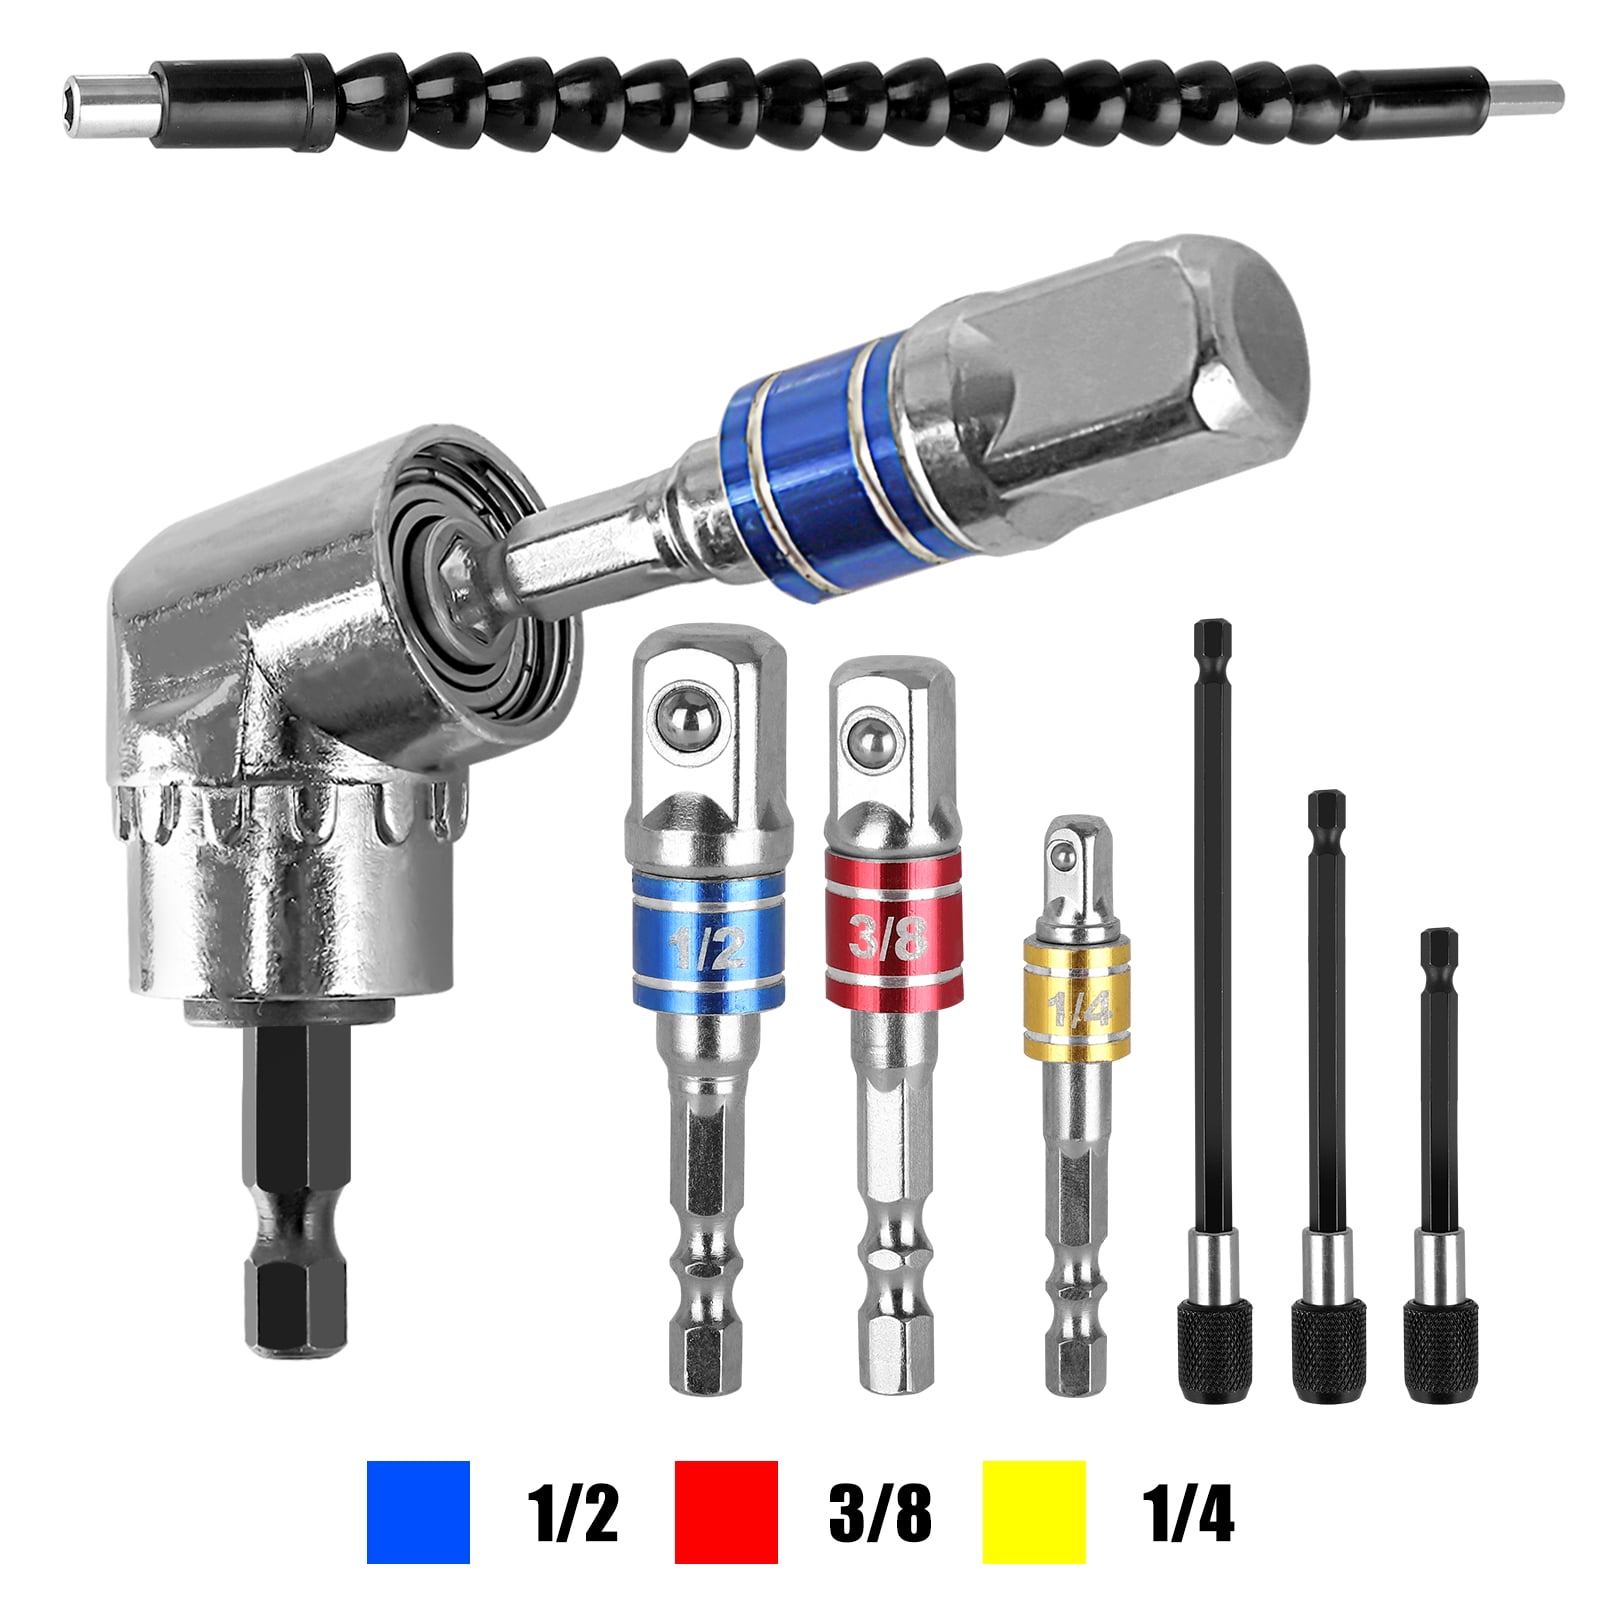 8pcs/3pcs Steel Socket Adapter Hex Extension Drill Bits Bar Power Tools Kits FM